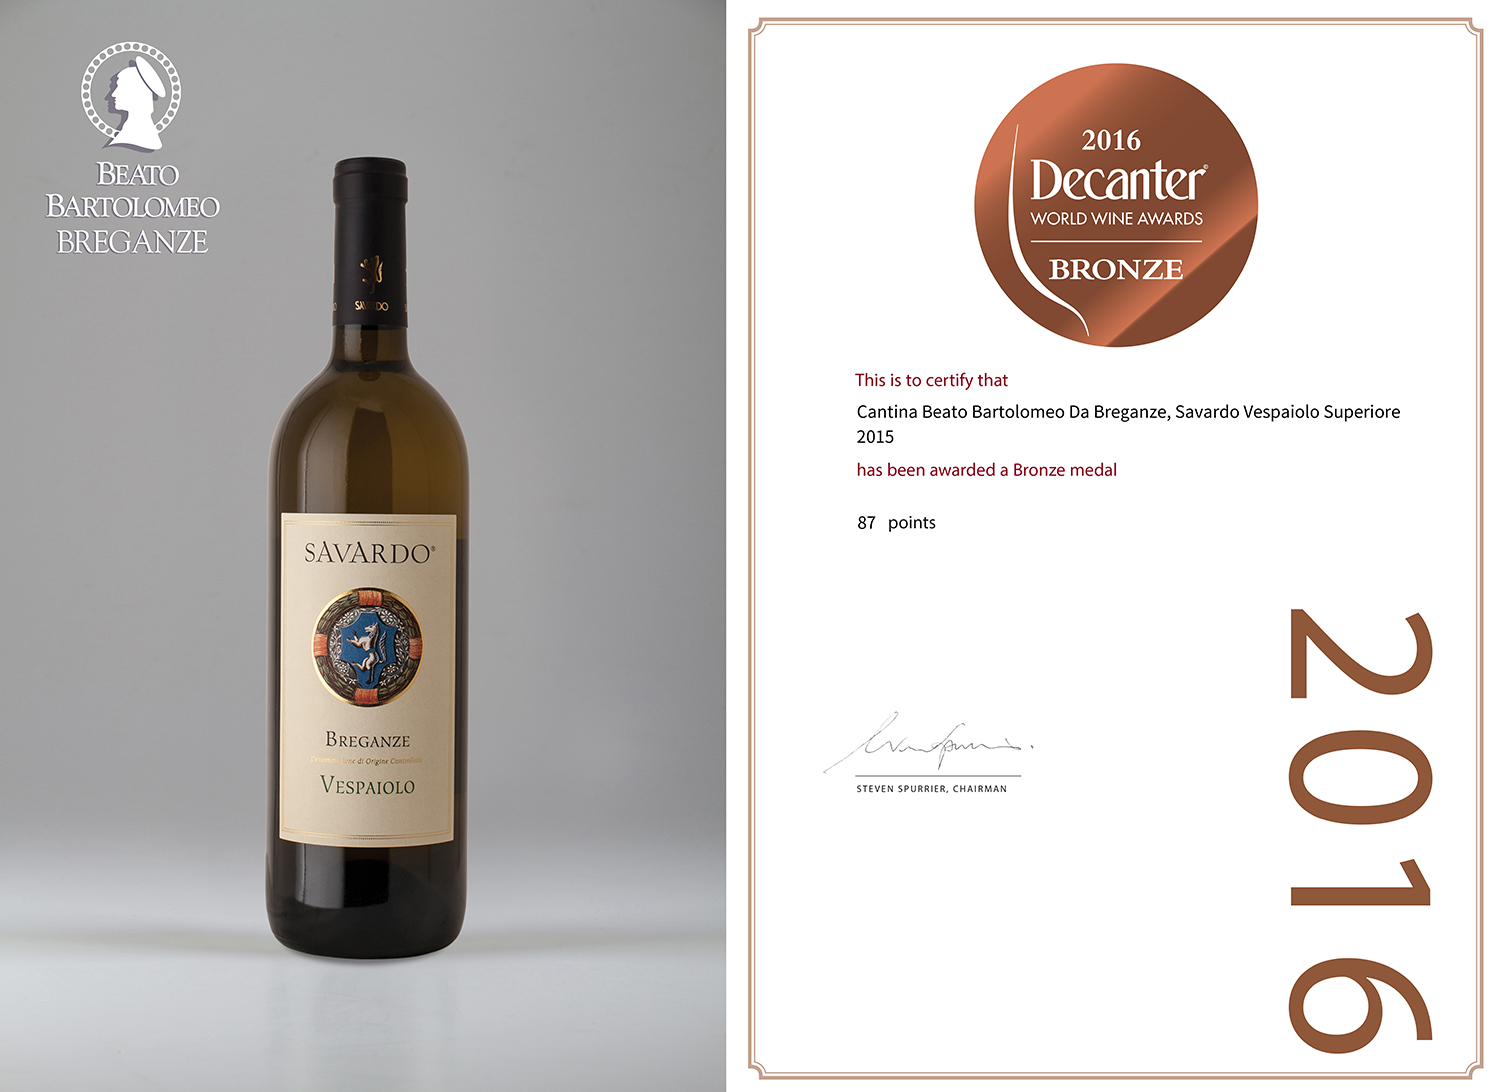 Vespaiolo Breganze DOC Superiore “Savardo” Decanter World Wine Awards 2016